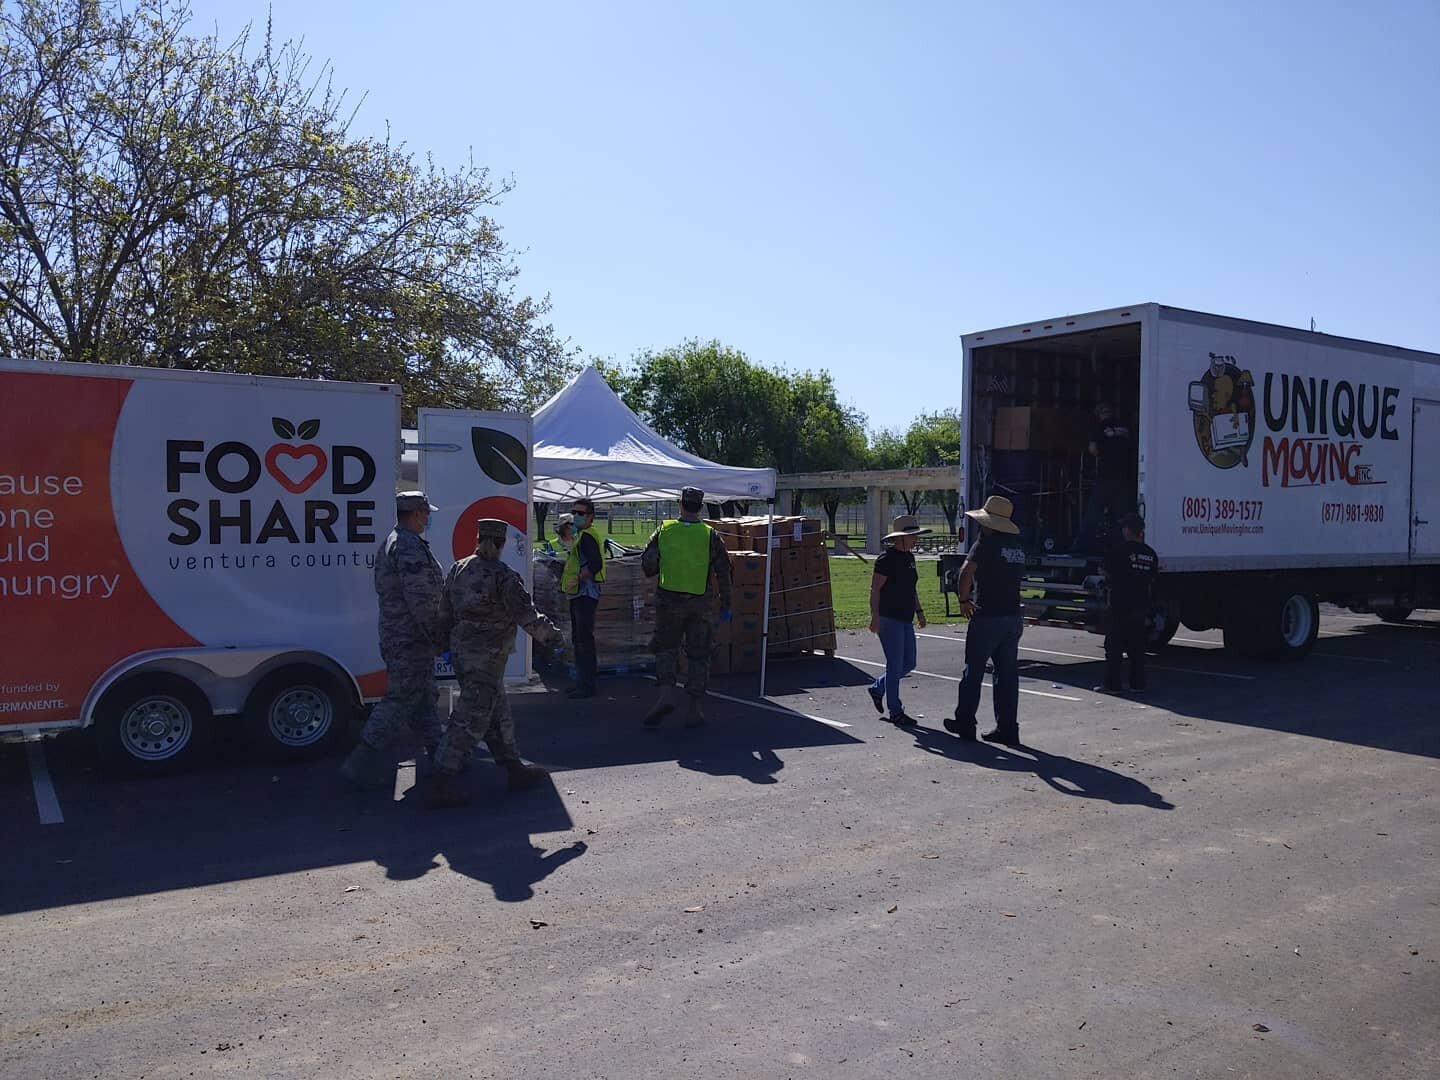 Helping in the community with #foodshare in #oxnard.

#UniqueMovingCares 
#uniquemovinginc #ventura #camarillo #moving #storage #community #covid #coronavirus #donate